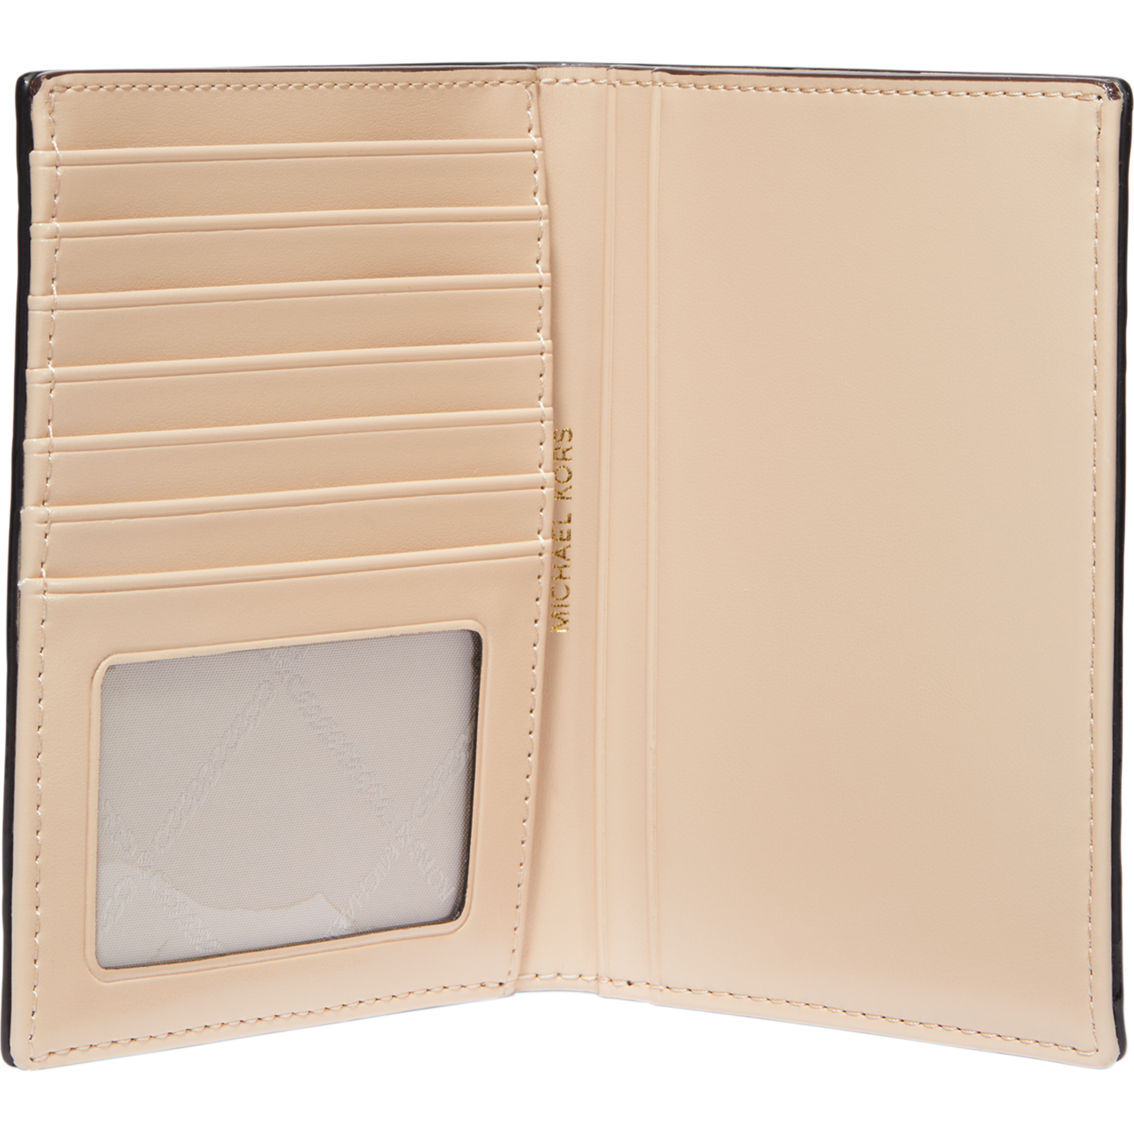 Michael Kors Bedford Travel Medium Passport Wallet - Image 2 of 2